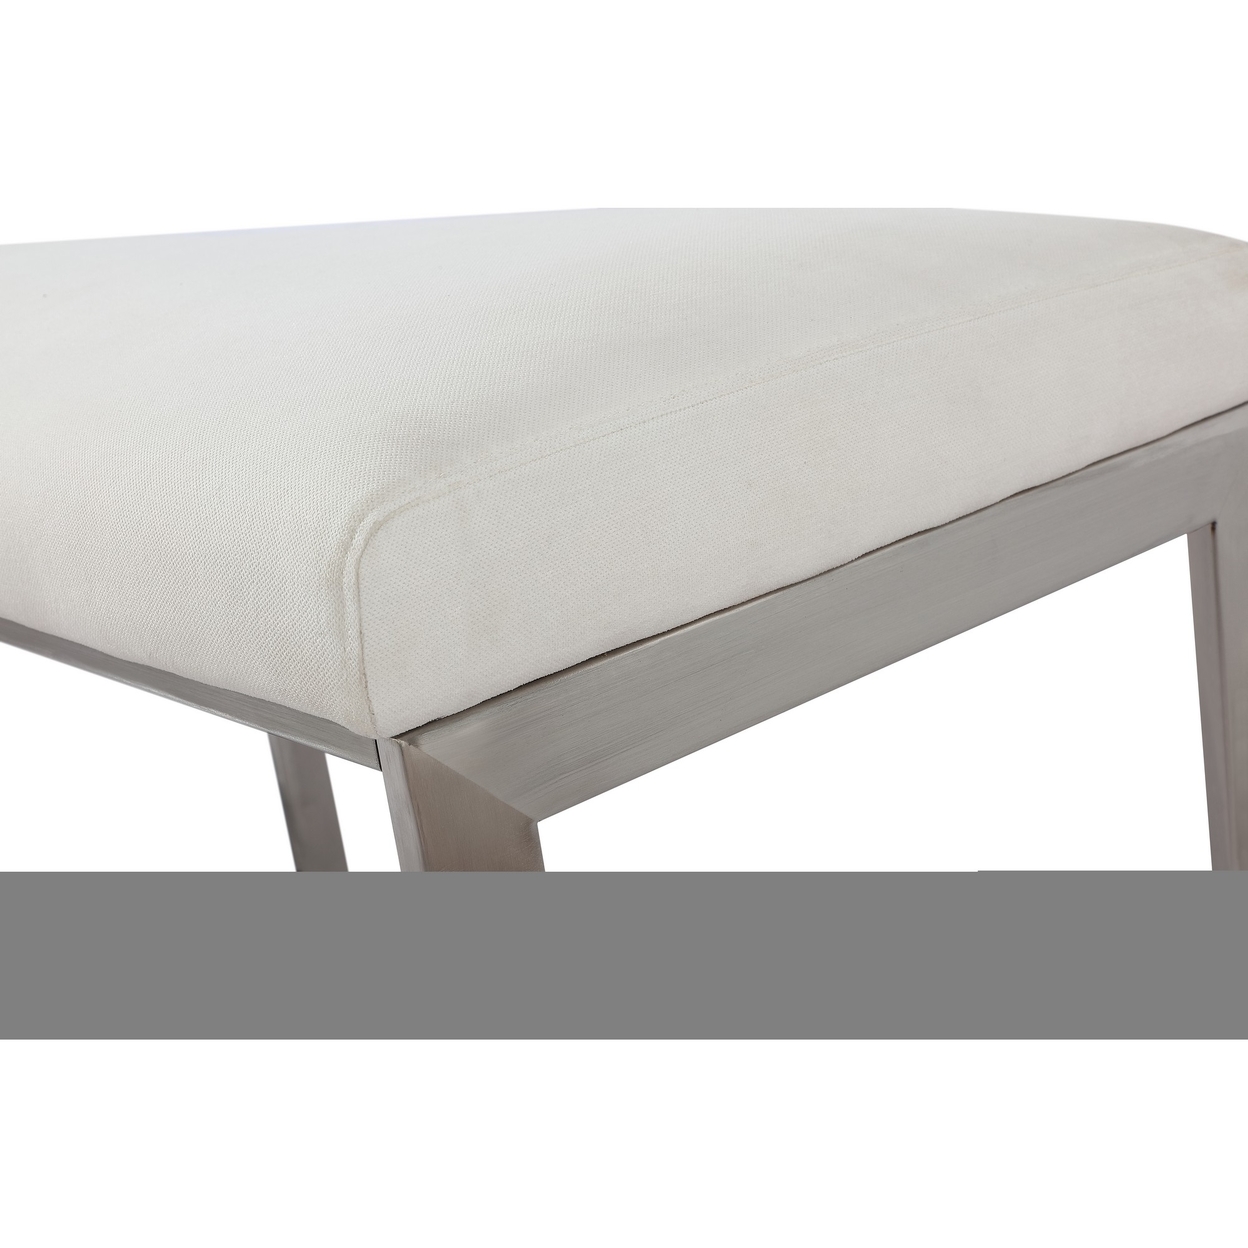 60 Inch Dining Bench, White Fabric Padded Seat, Brushed Silver Steel Base - Saltoro Sherpi